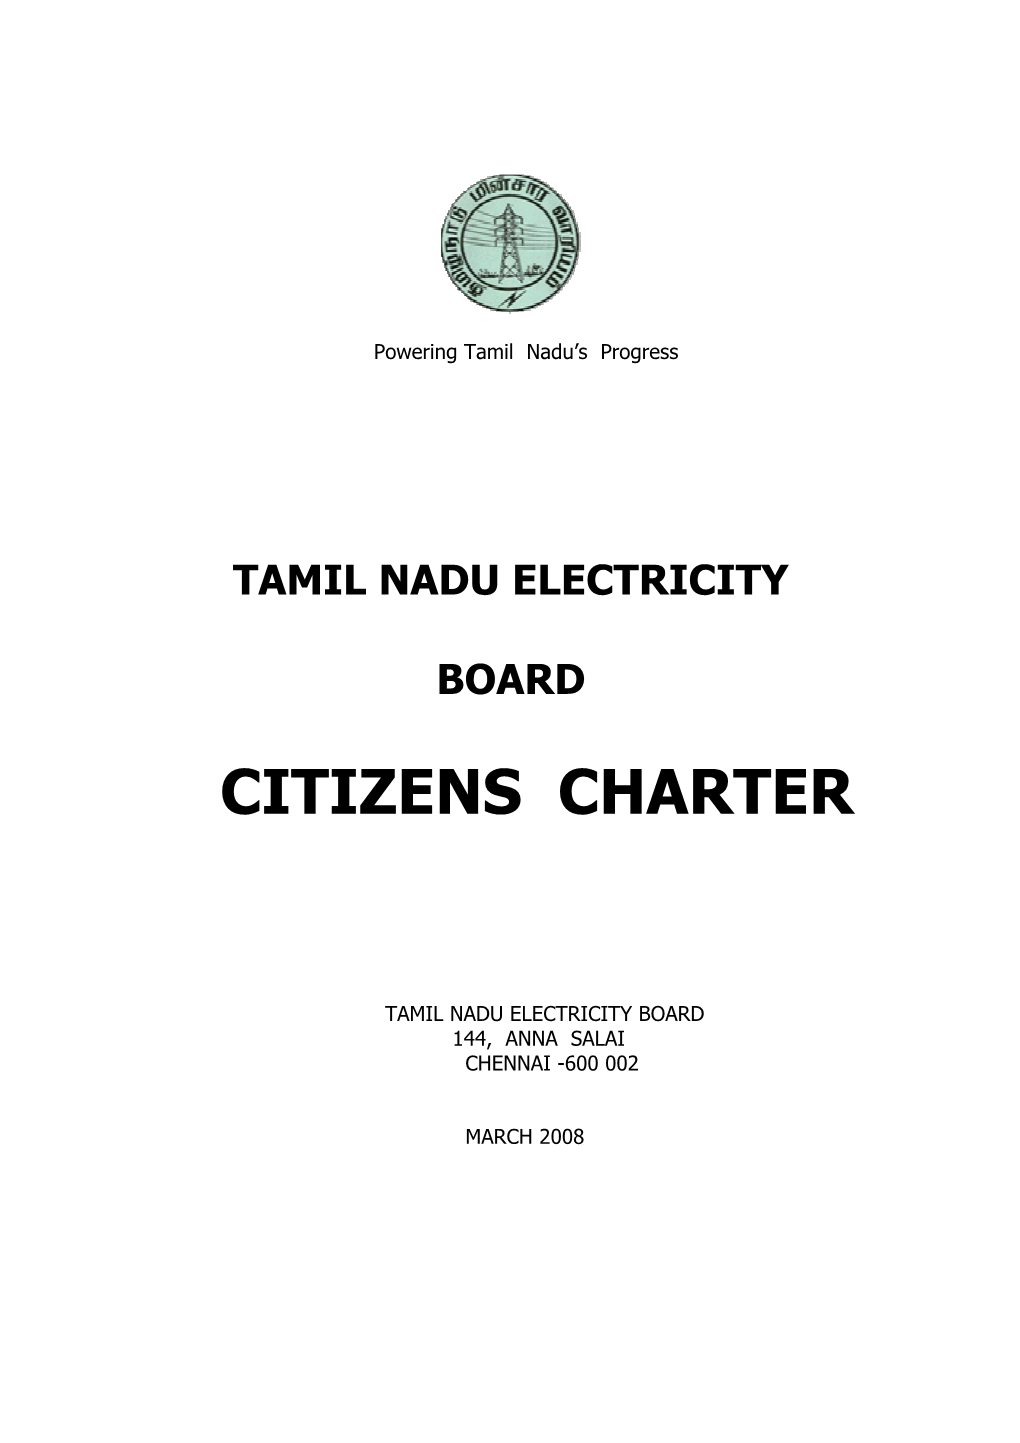 Tamil Nadu Electricity Board Citizens Charter